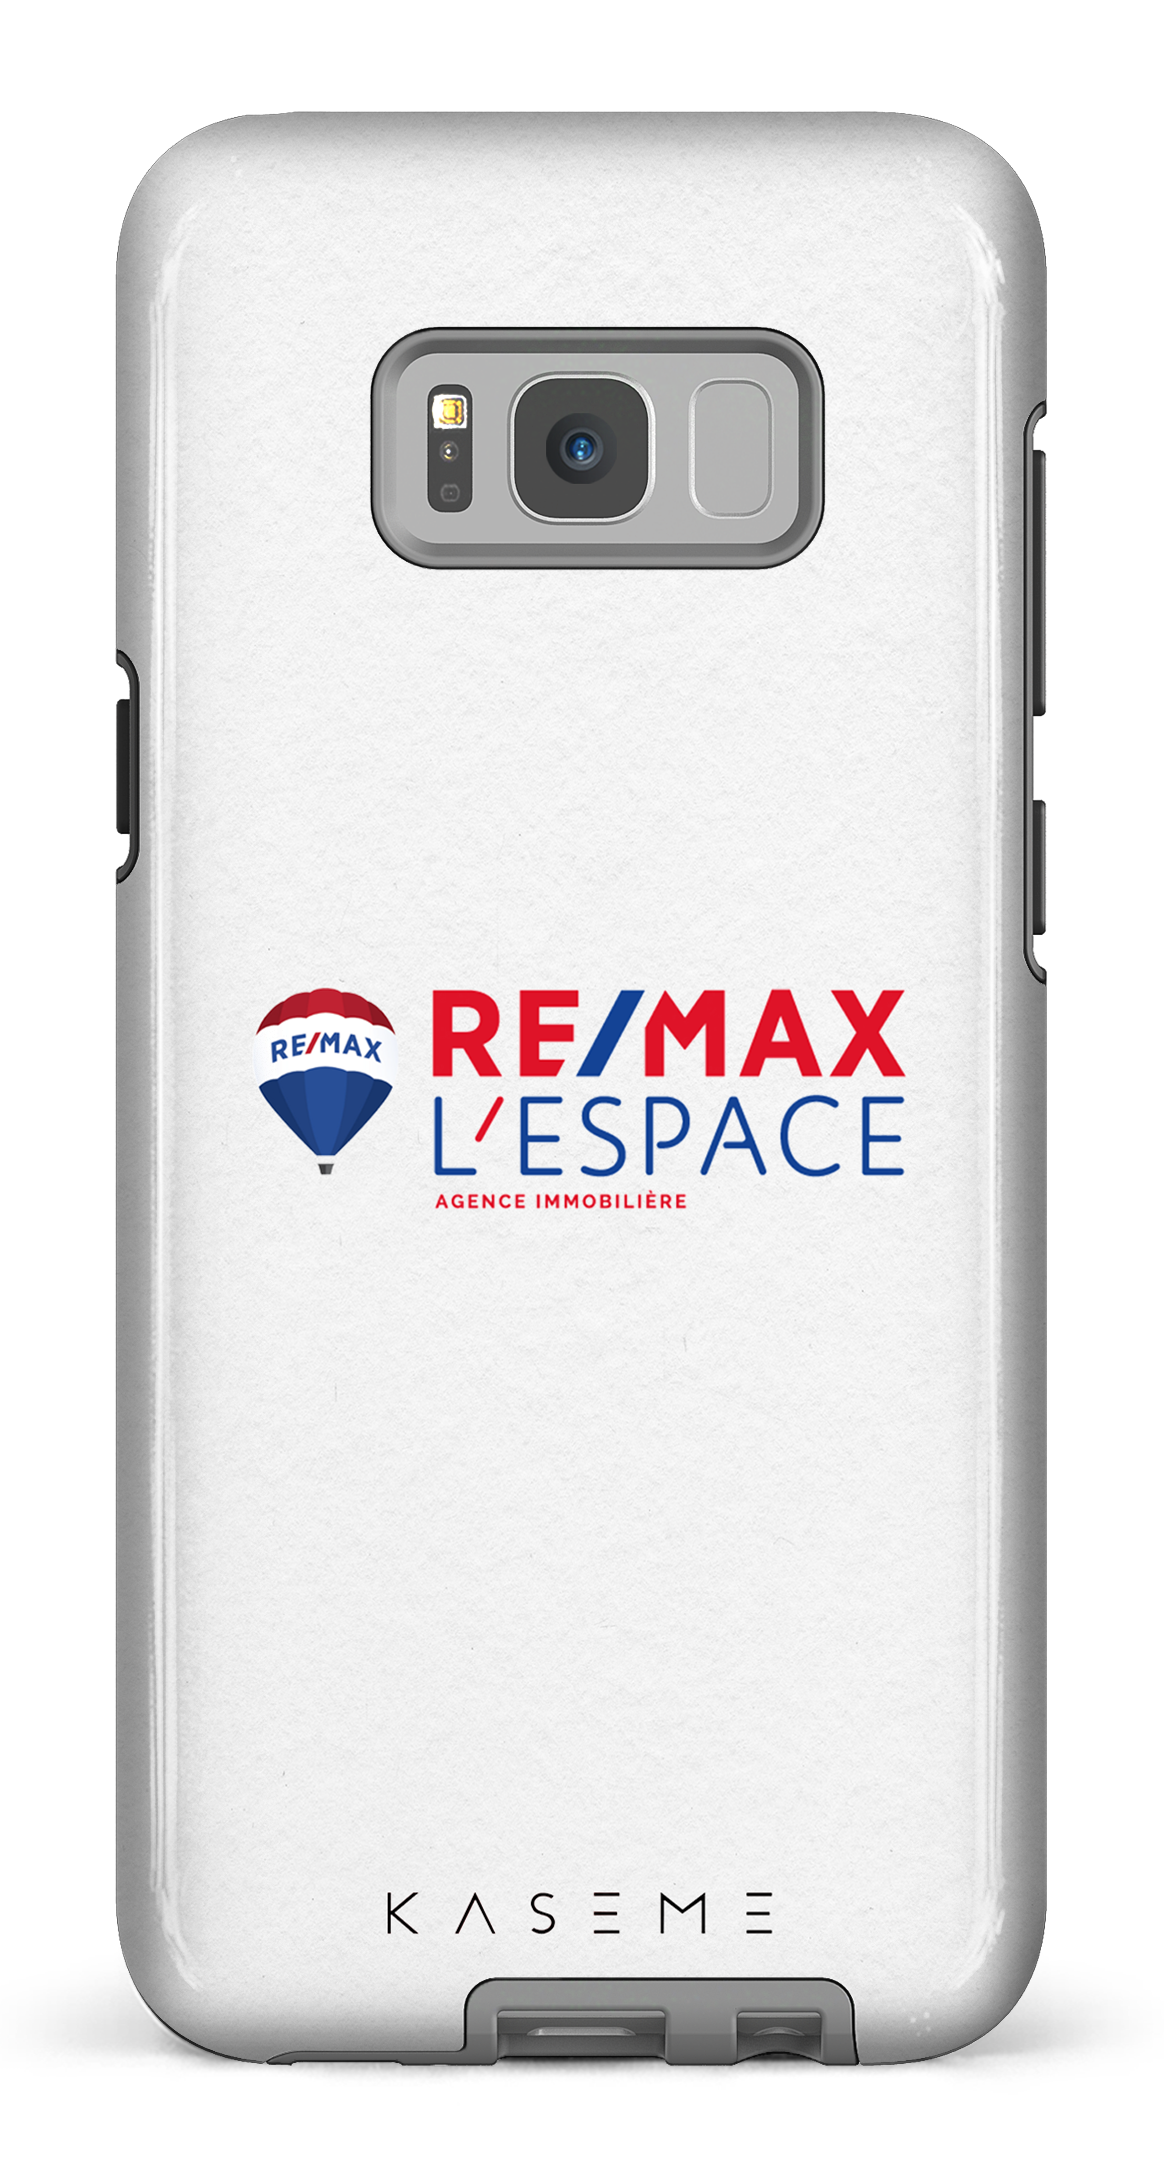 Remax L'Espace Blanc - Galaxy S8 Plus